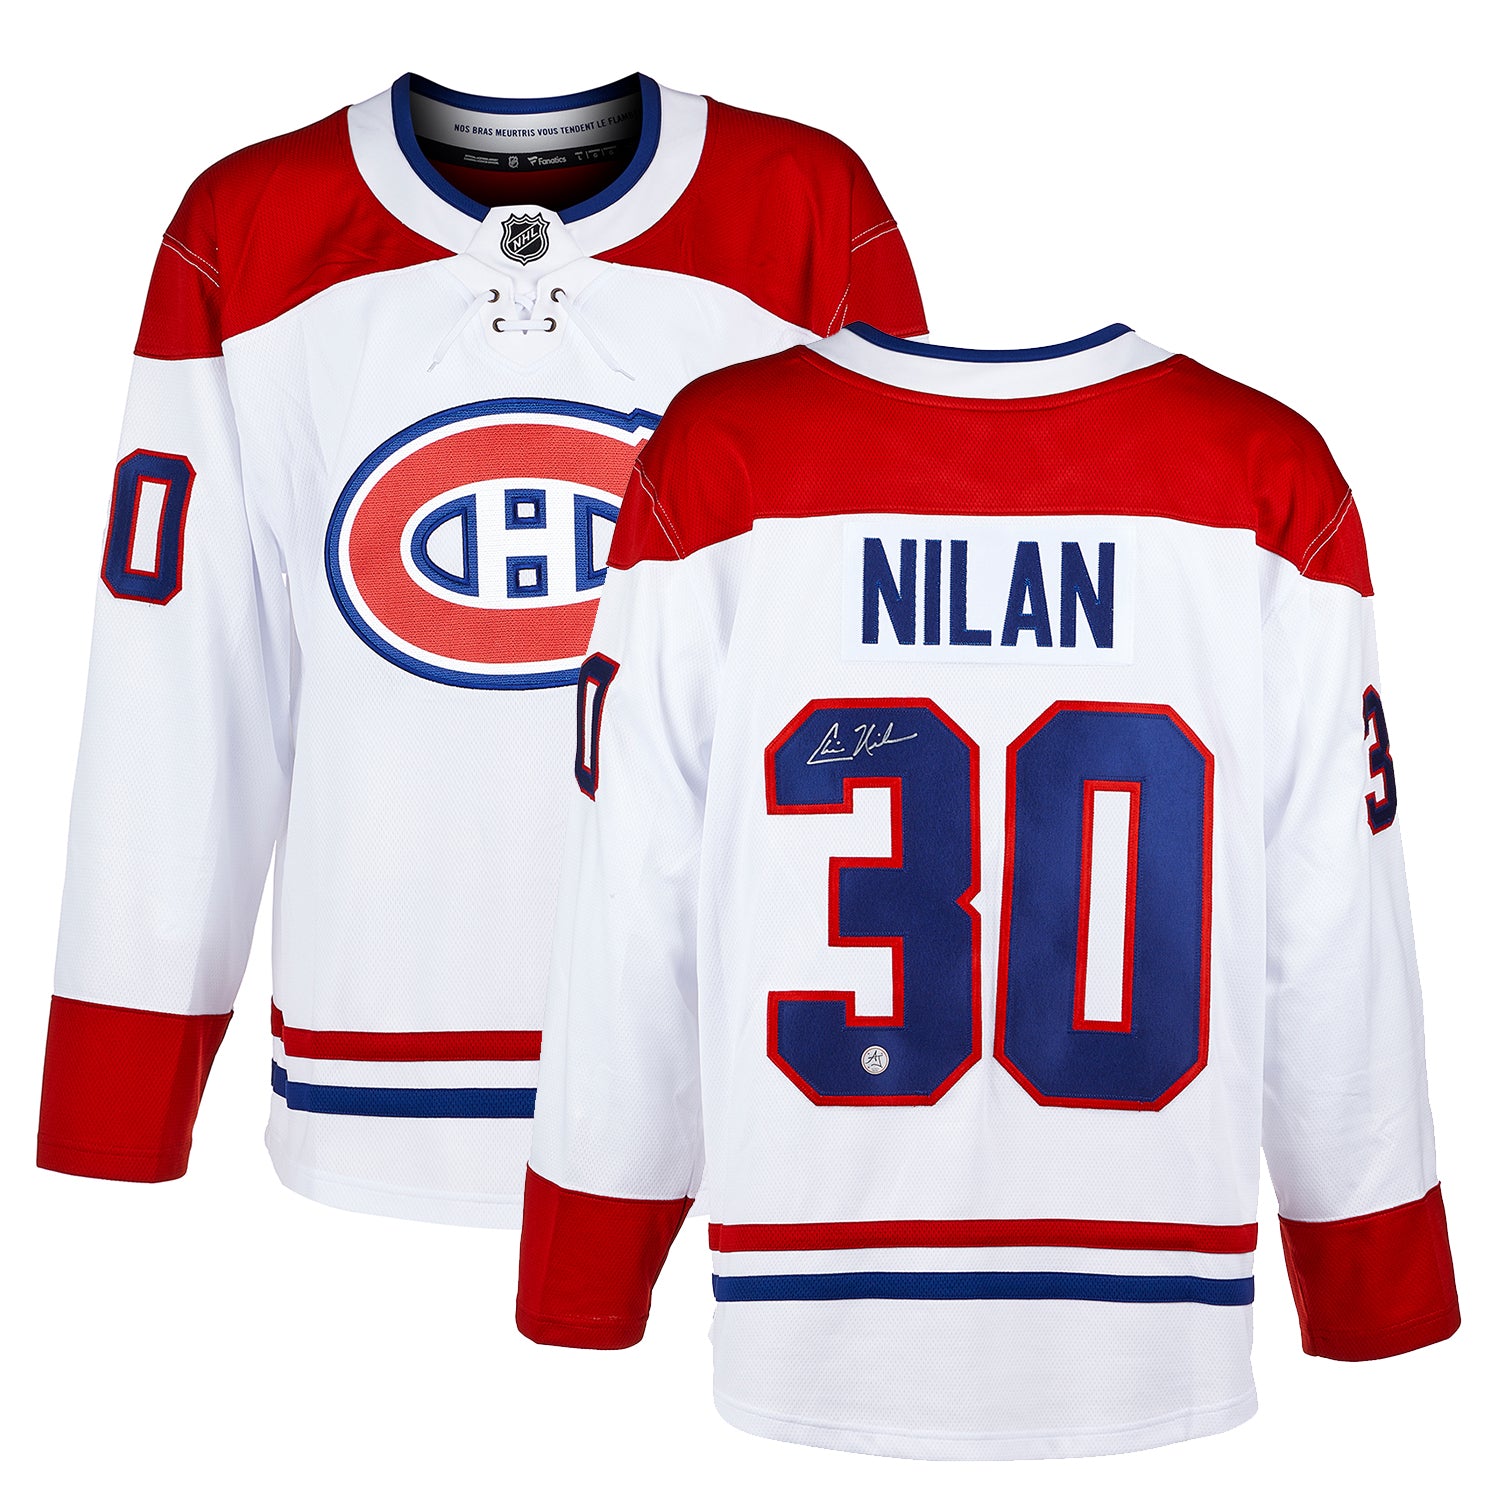 Chris Nilan Autographed Montreal Canadiens White Fanatics Jersey